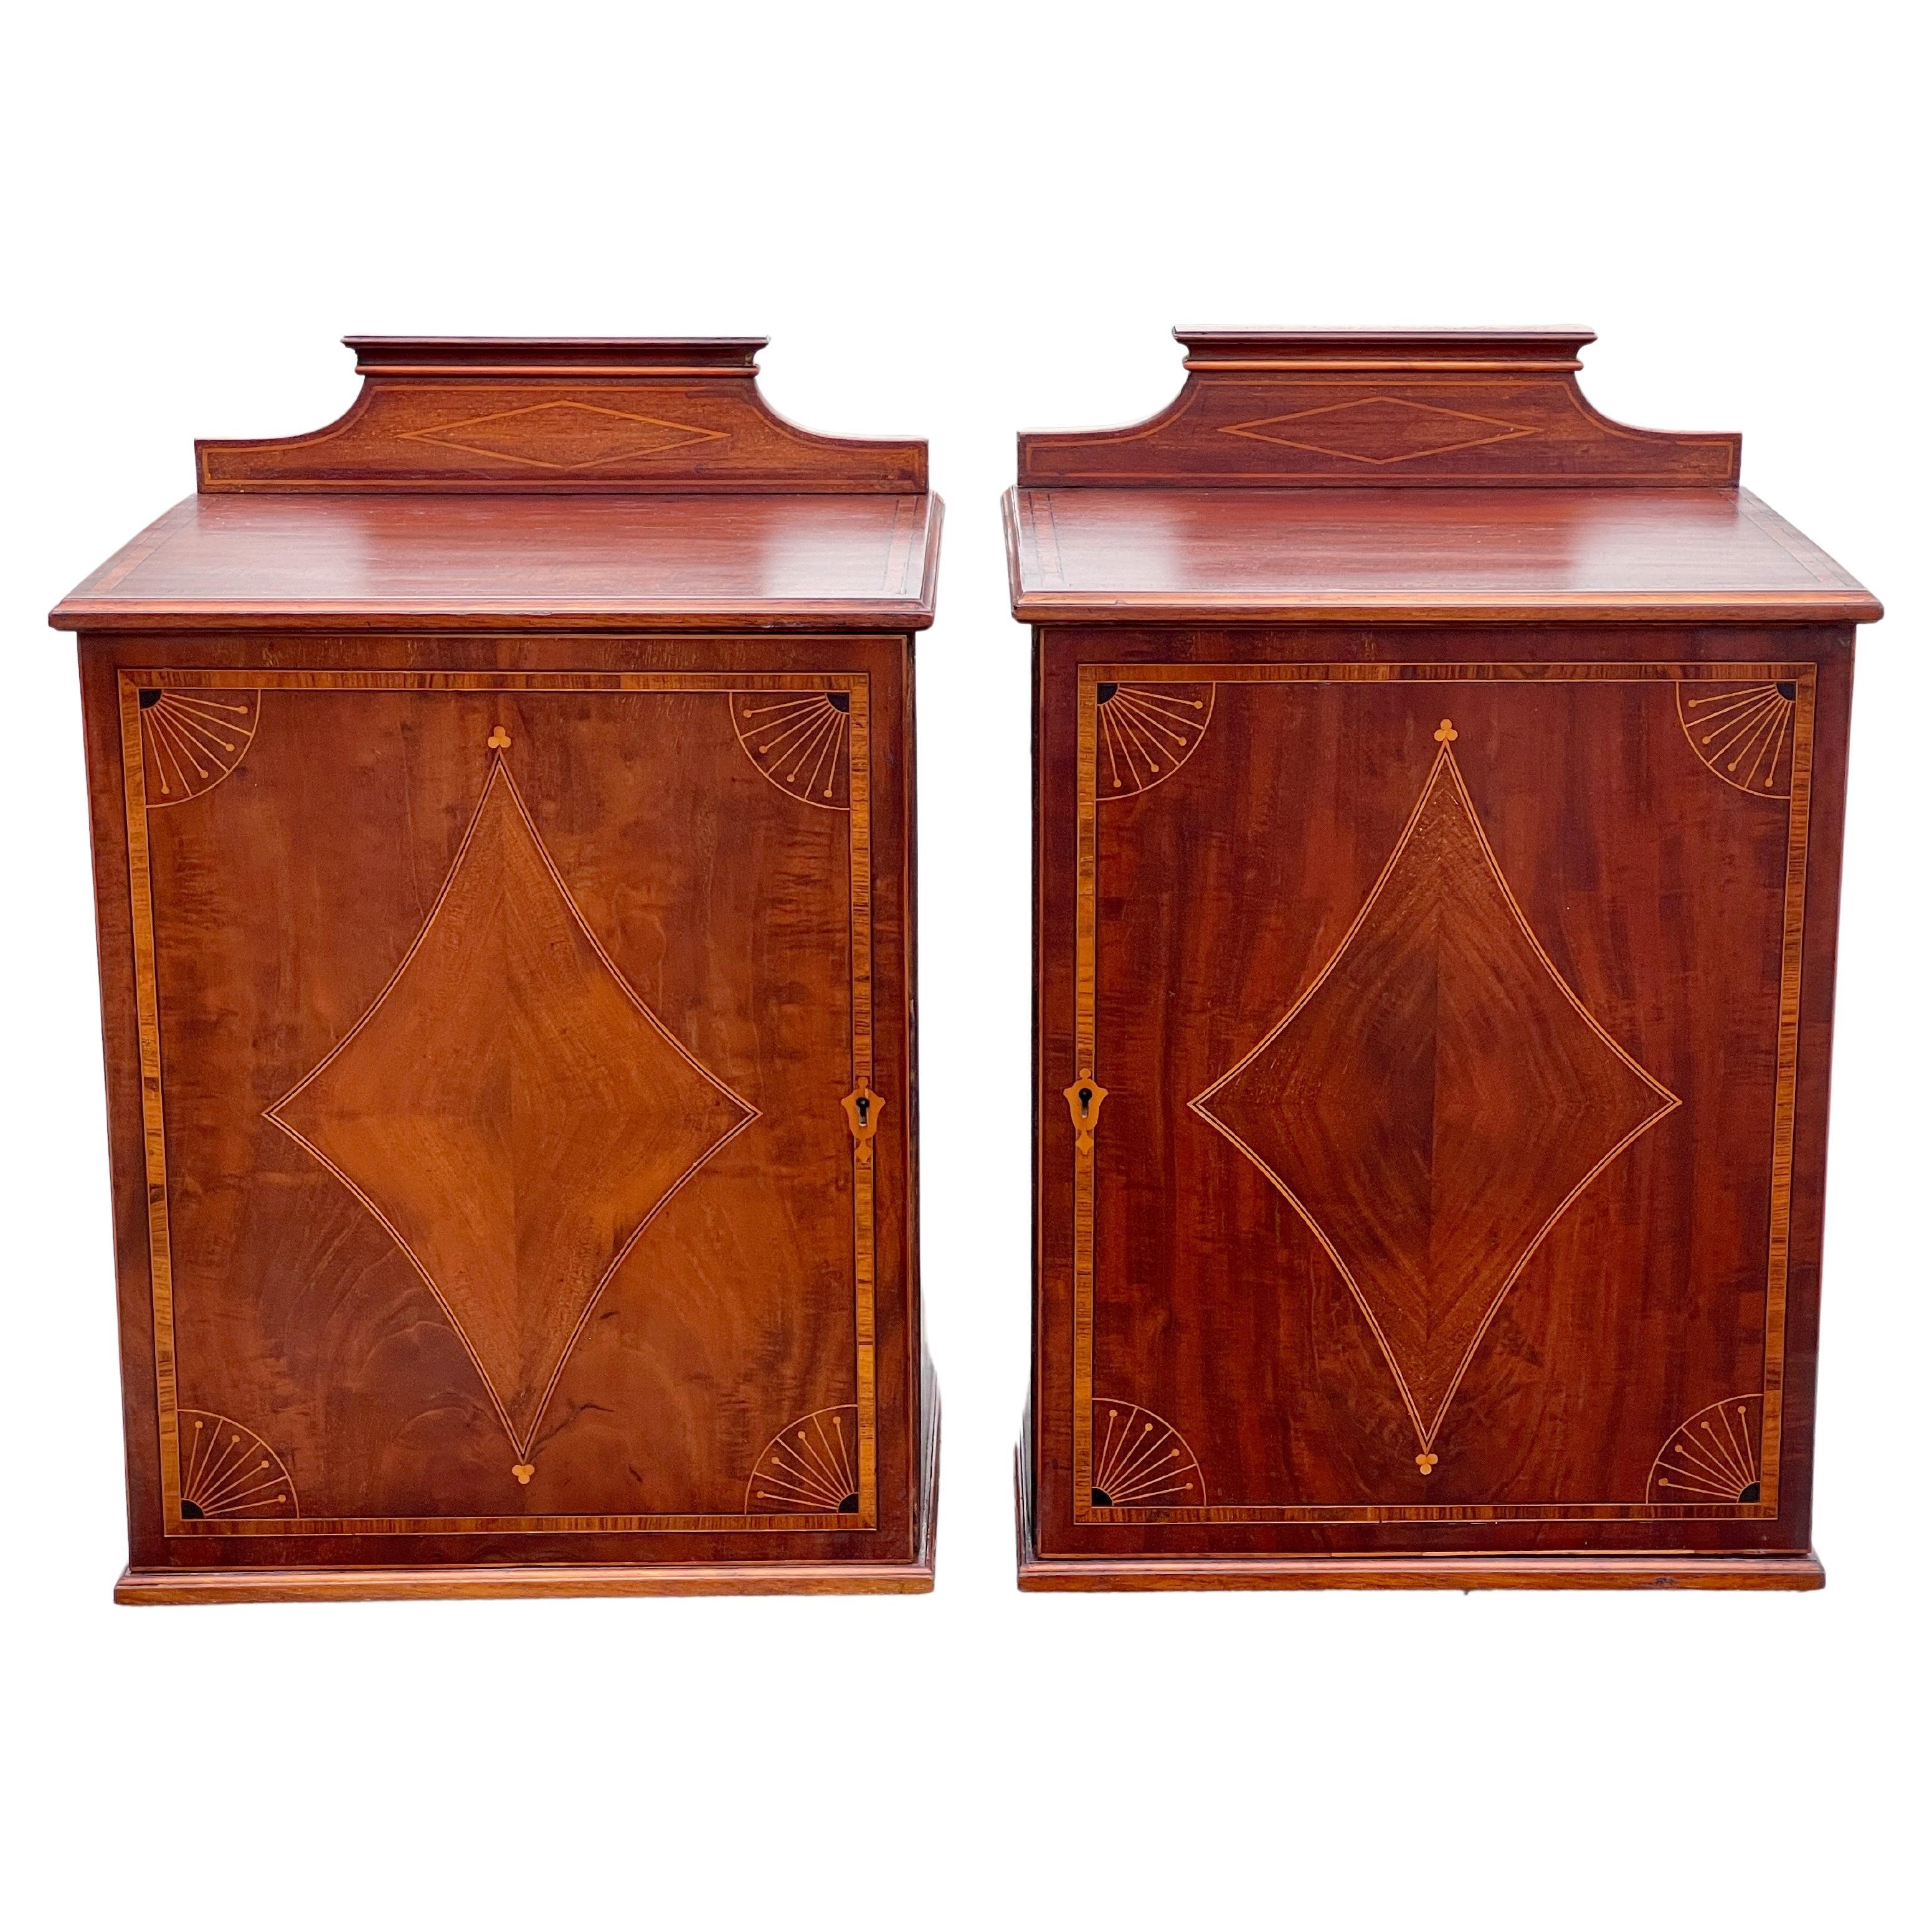 Pair of Sheraton Revival Small Locking Cabinets